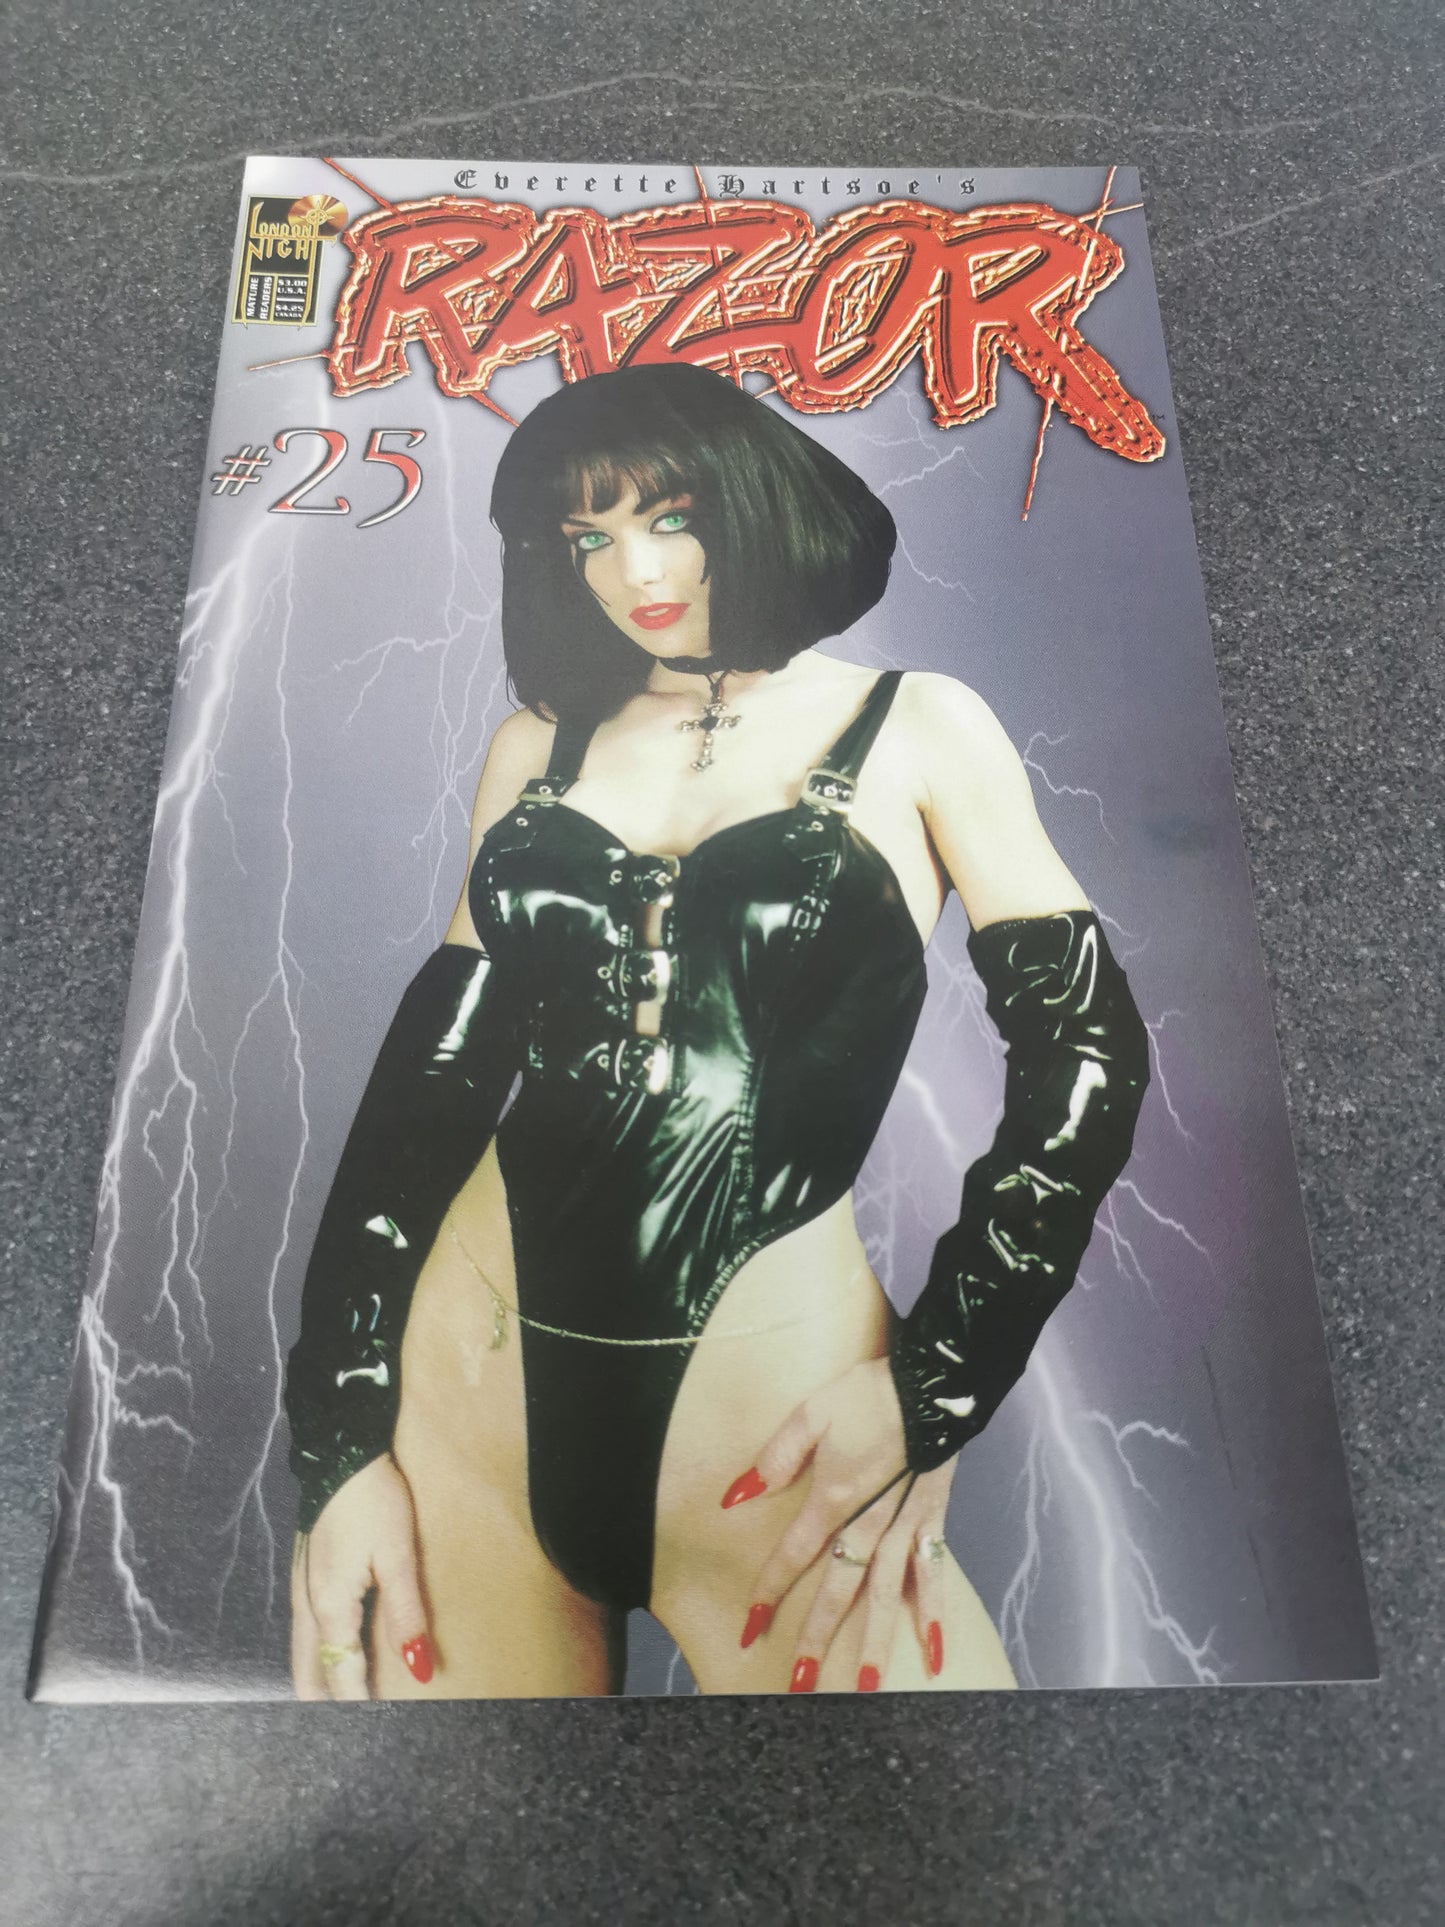 Razor Uncut #25 1996 London Night Studios comic